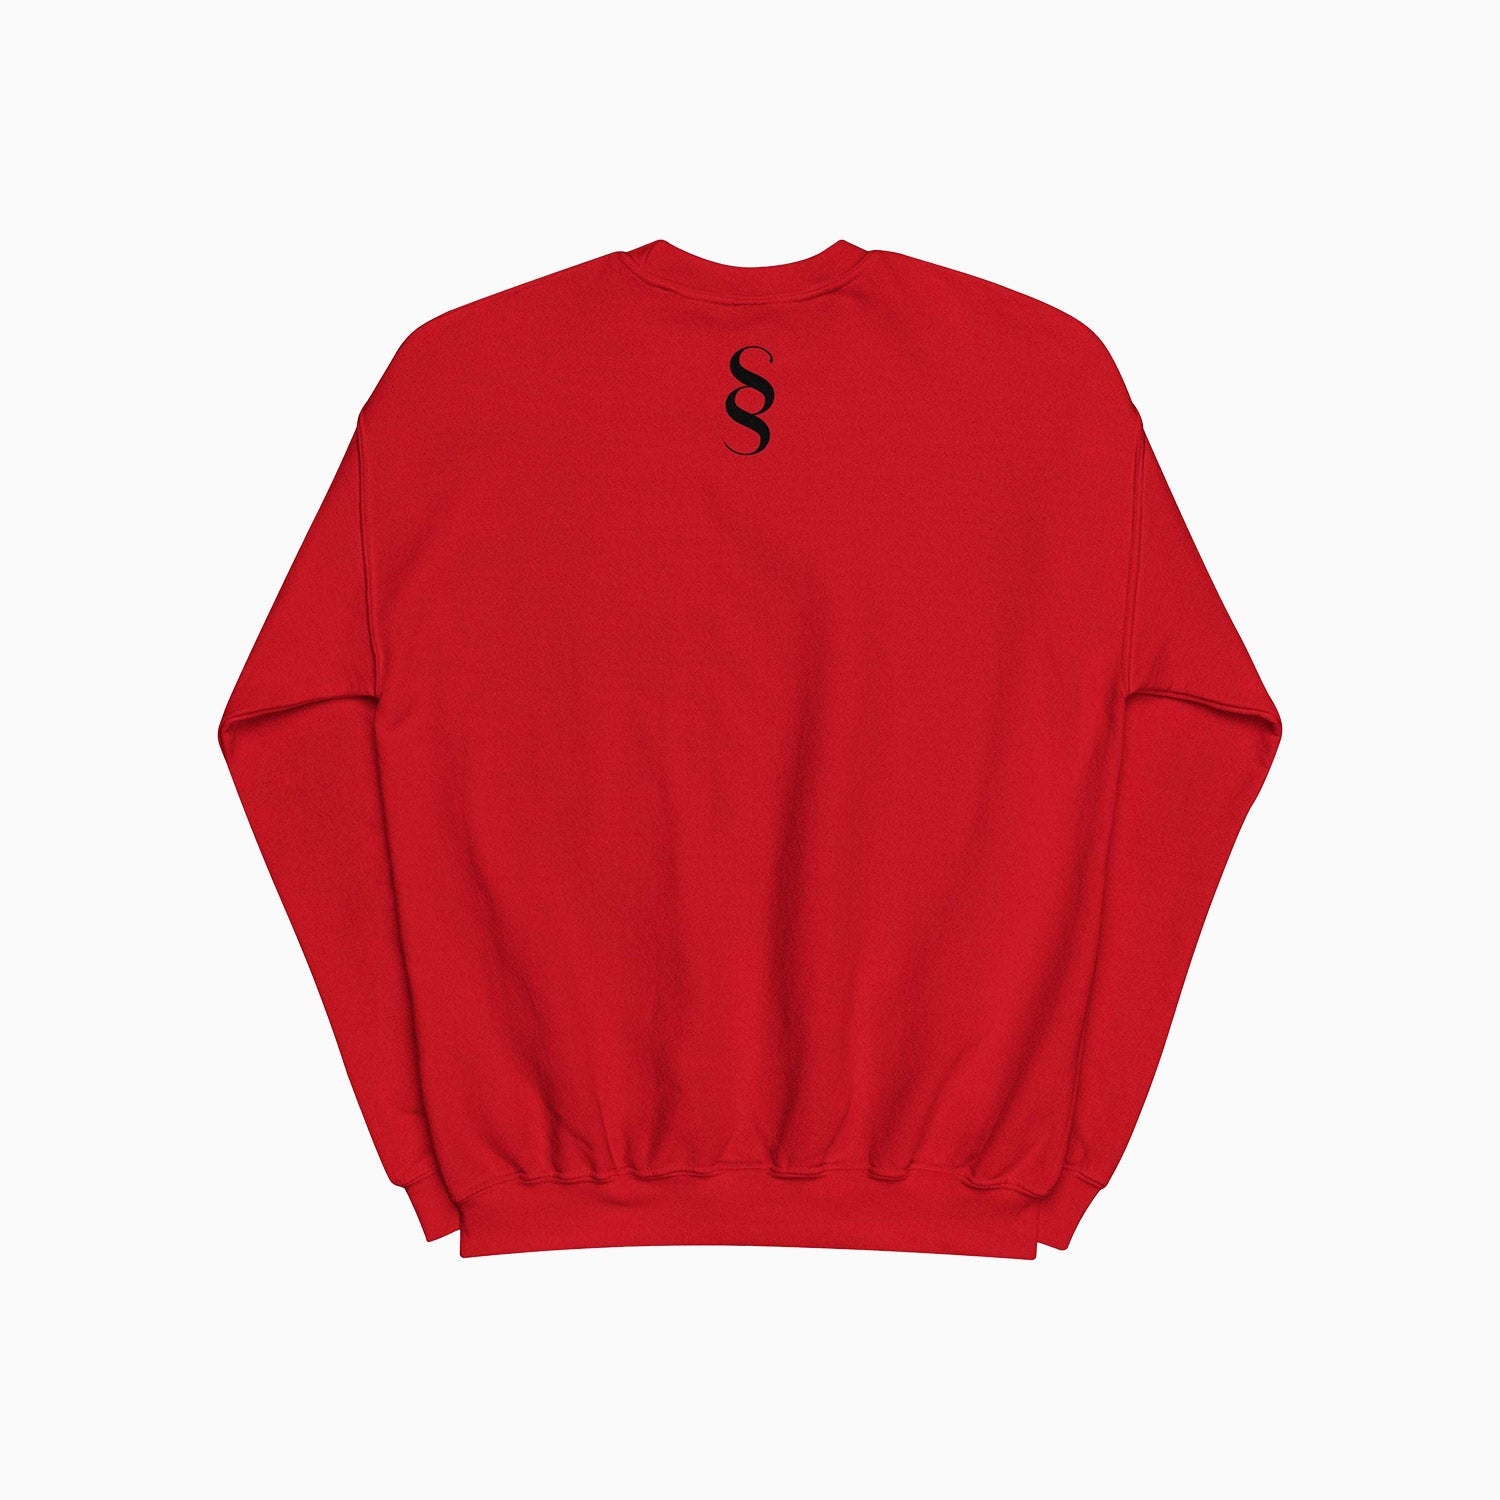 emblem-design-printed-crew-neck-red-sweatshirt-for-men-sc103-657